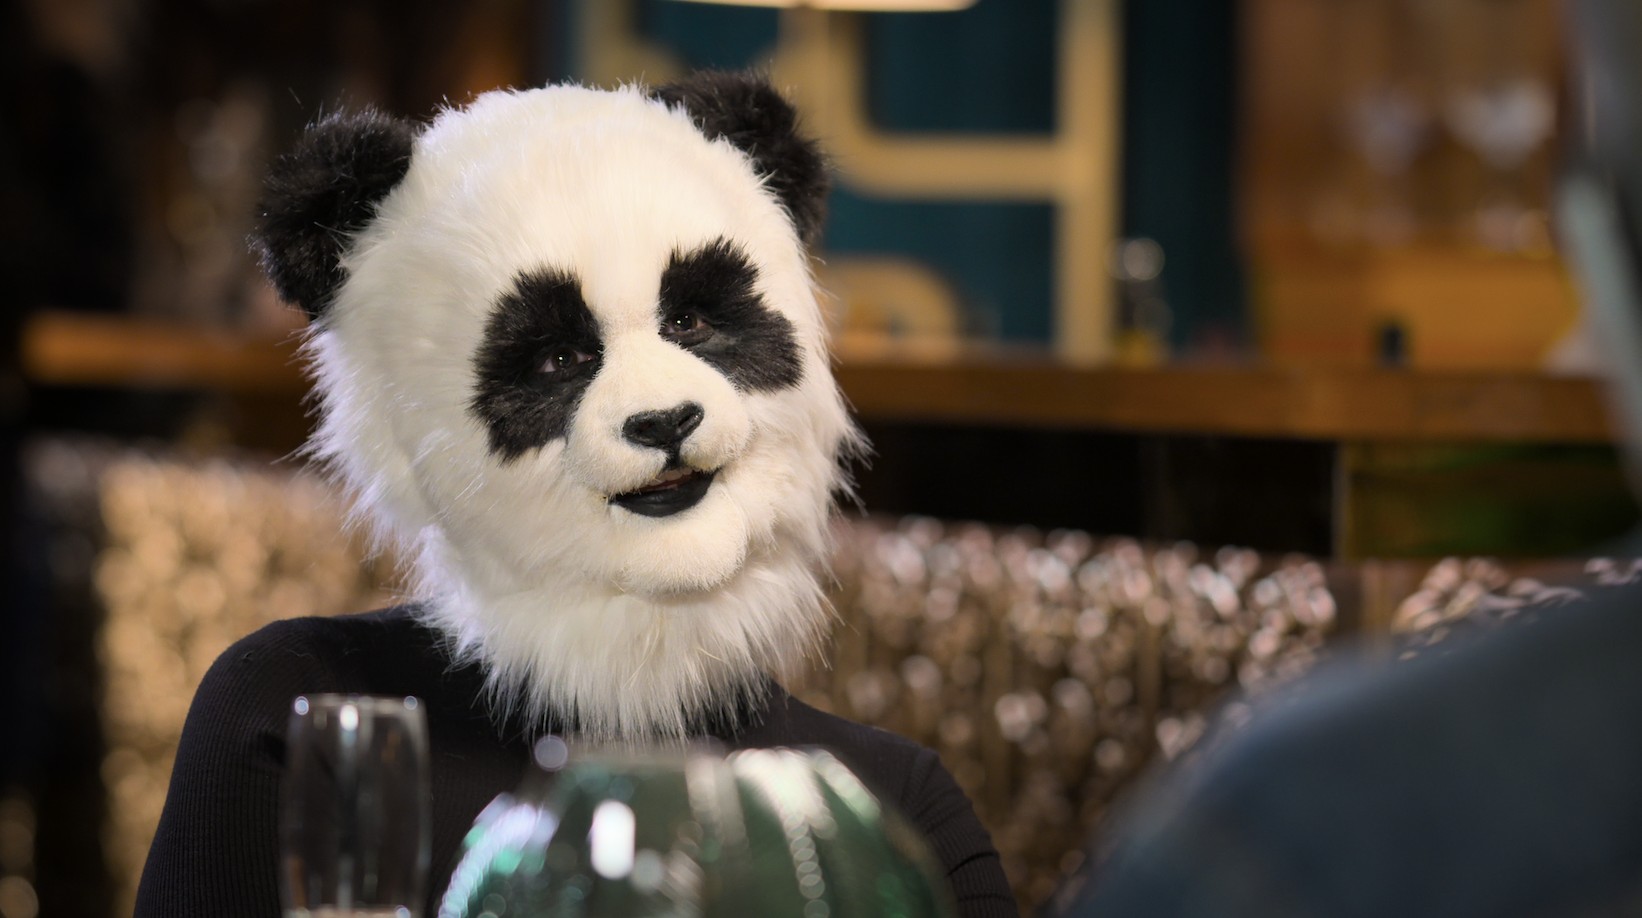 A girl dressed as a panda